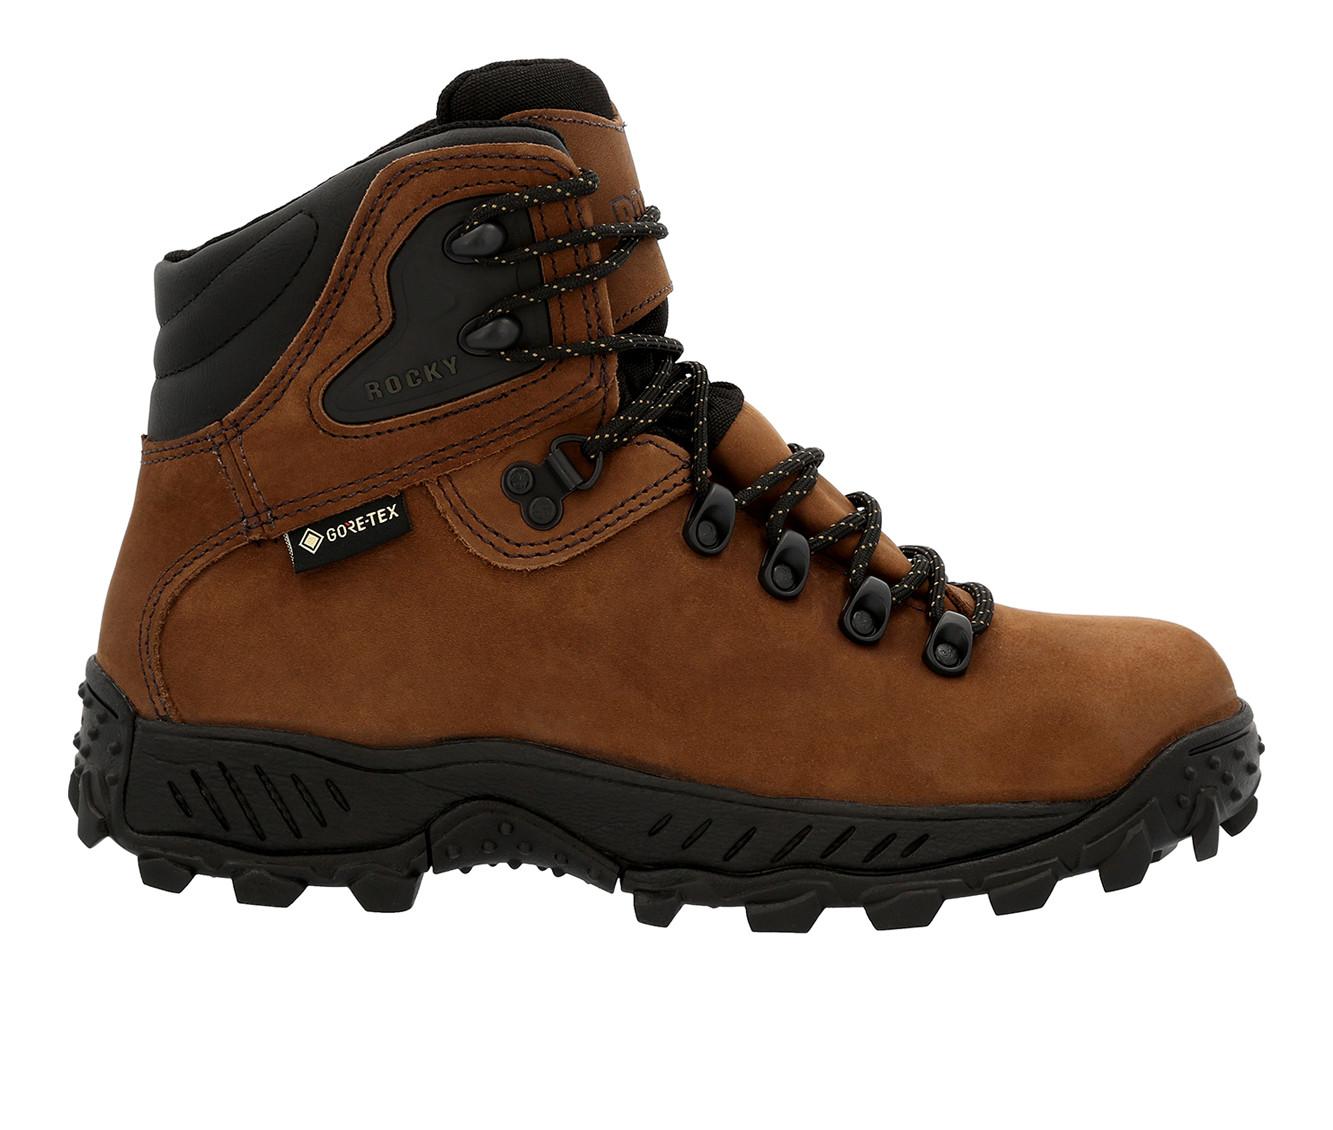 Men's Rocky Ridgetop GORE-TEX Waterproof Hiking Boots